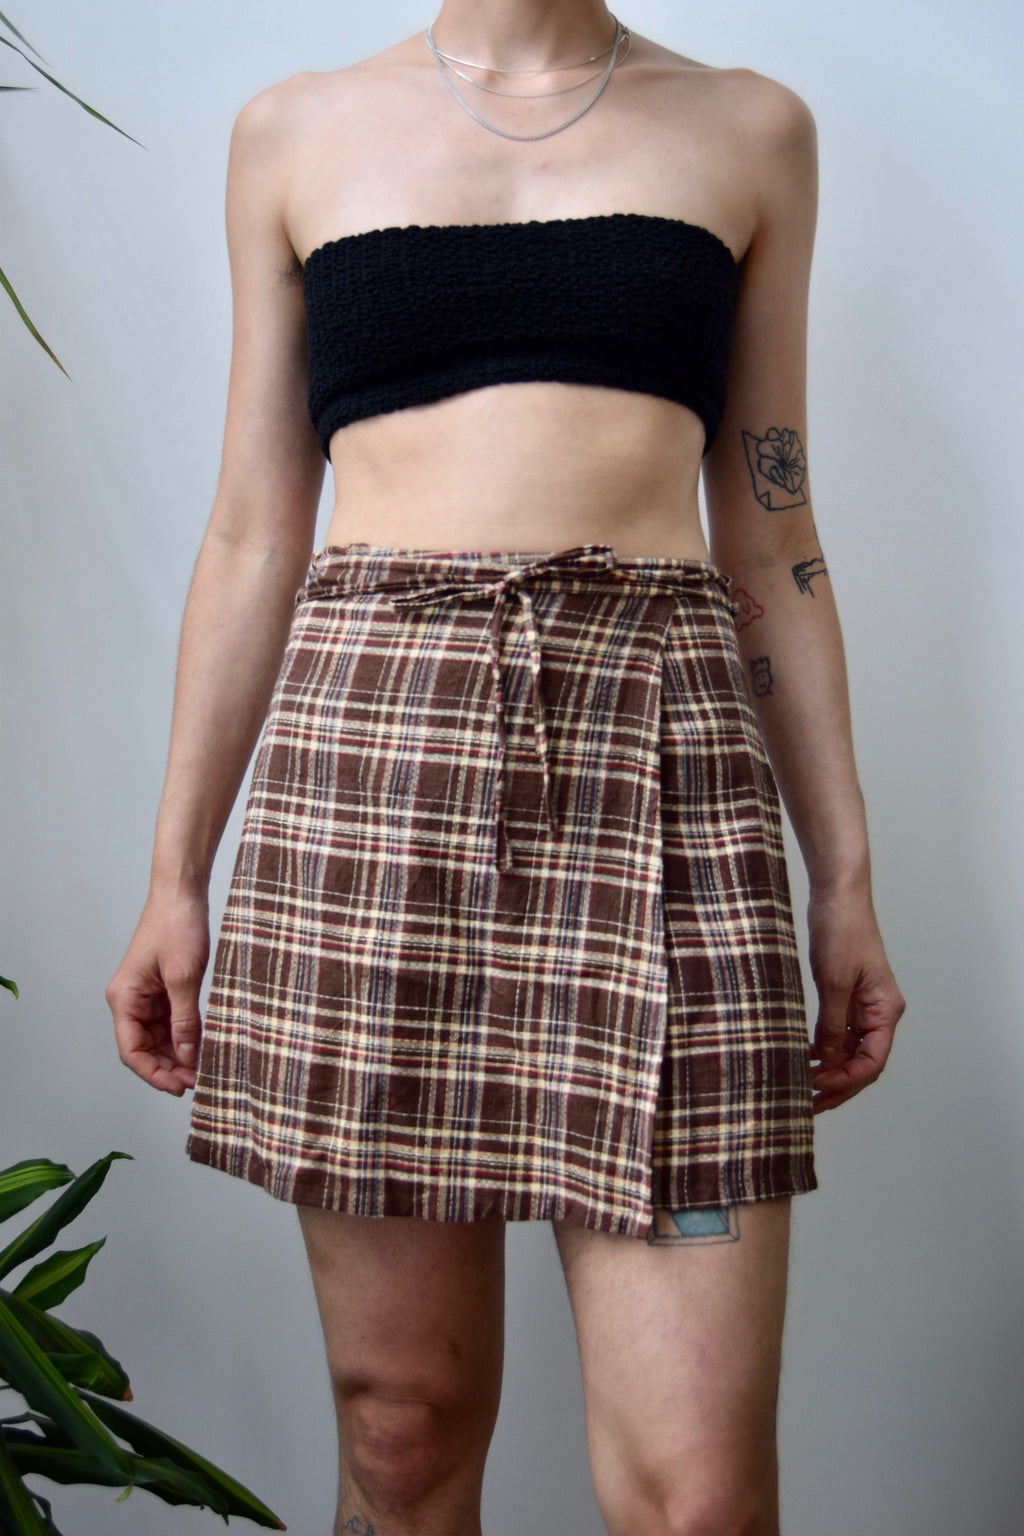 Brittany Murphy Skirt